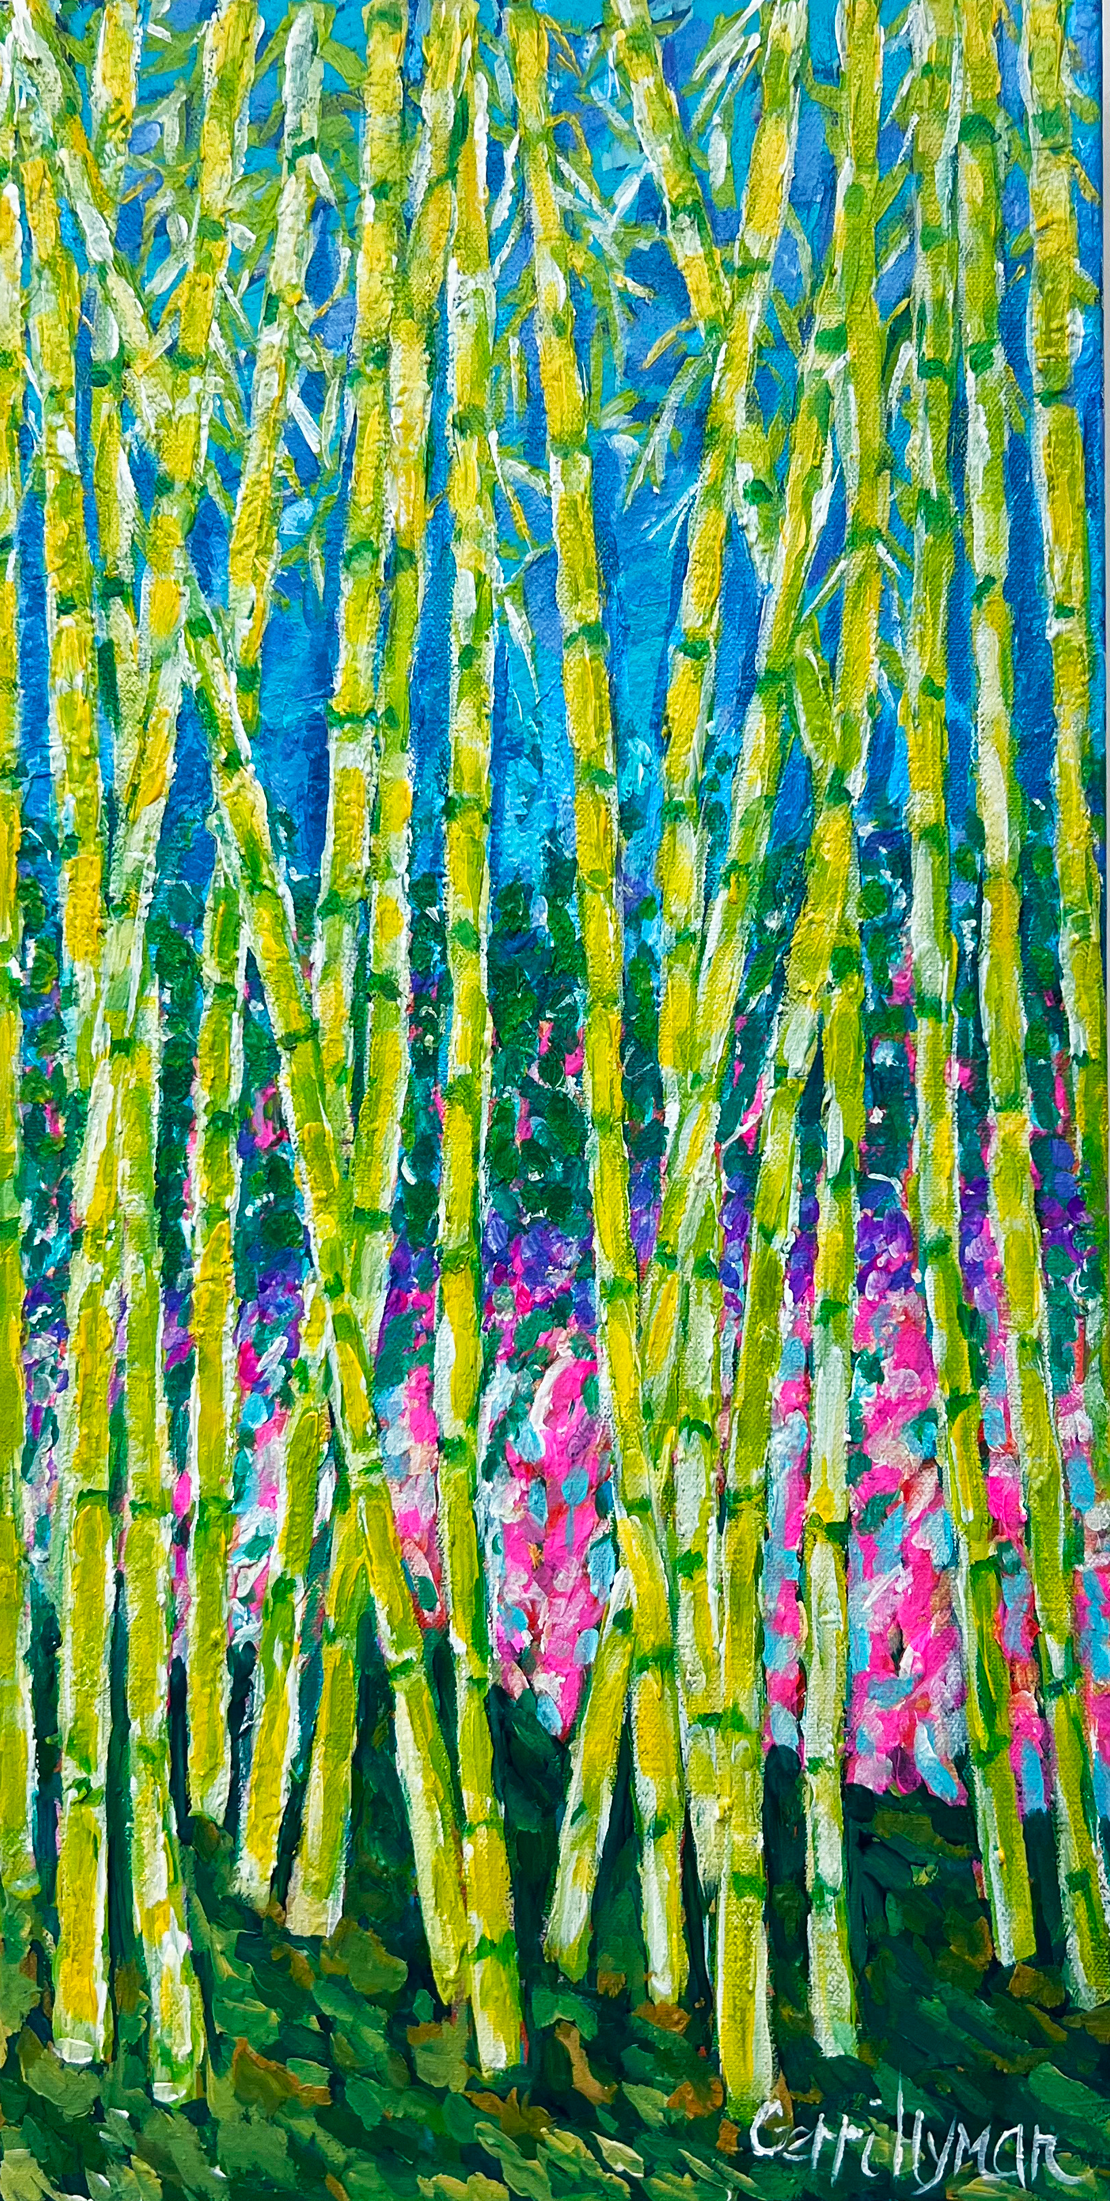 Bamboo painting 1 svop68